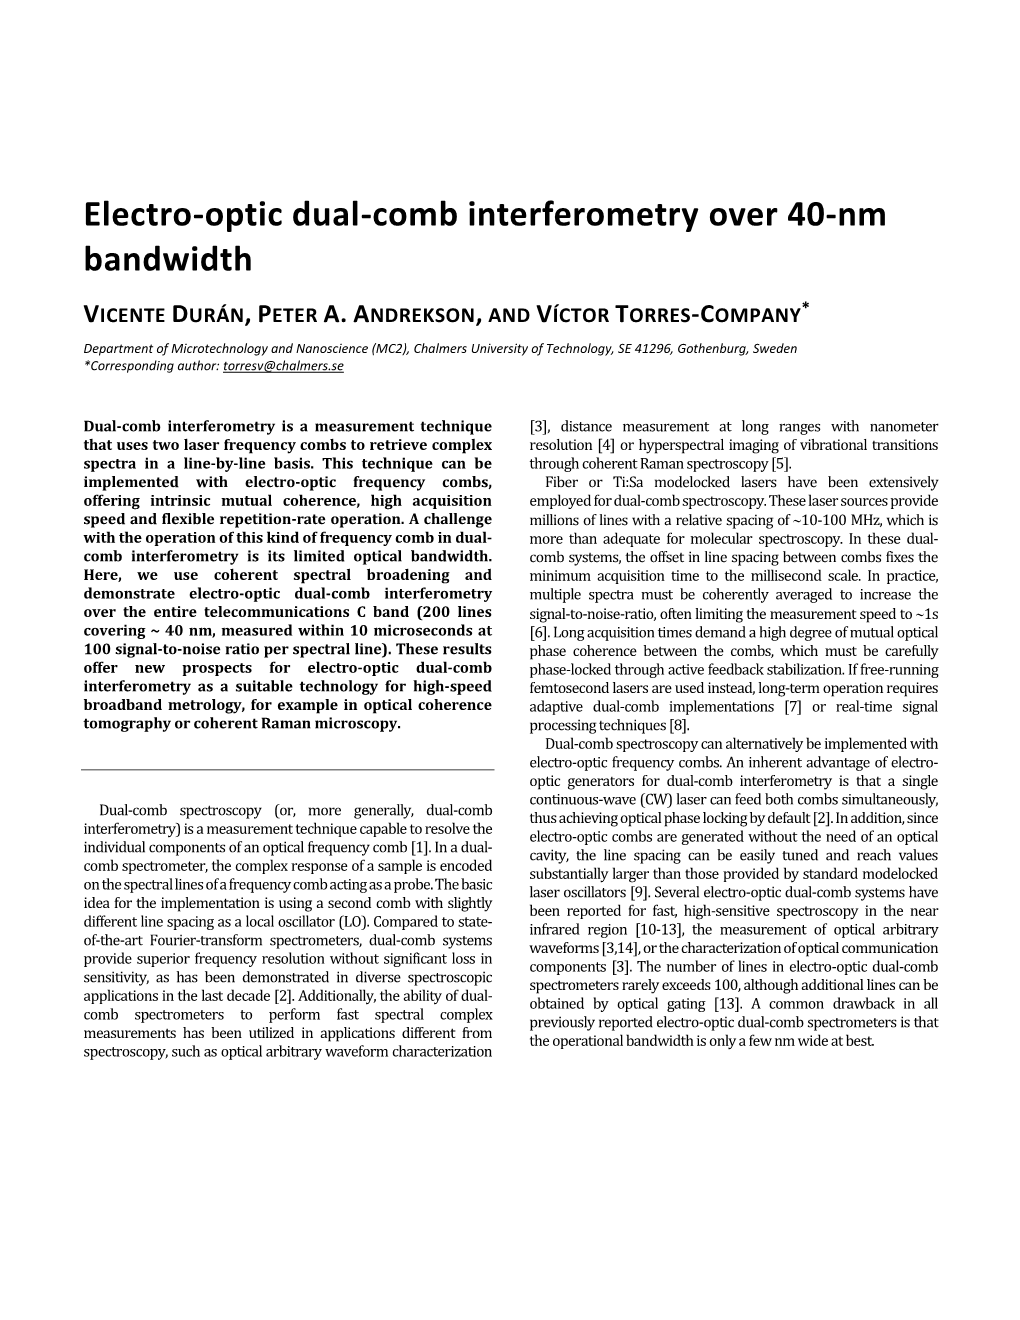 Electro-Optic Dual-Comb Interferometry Over 40-Nm Bandwidth